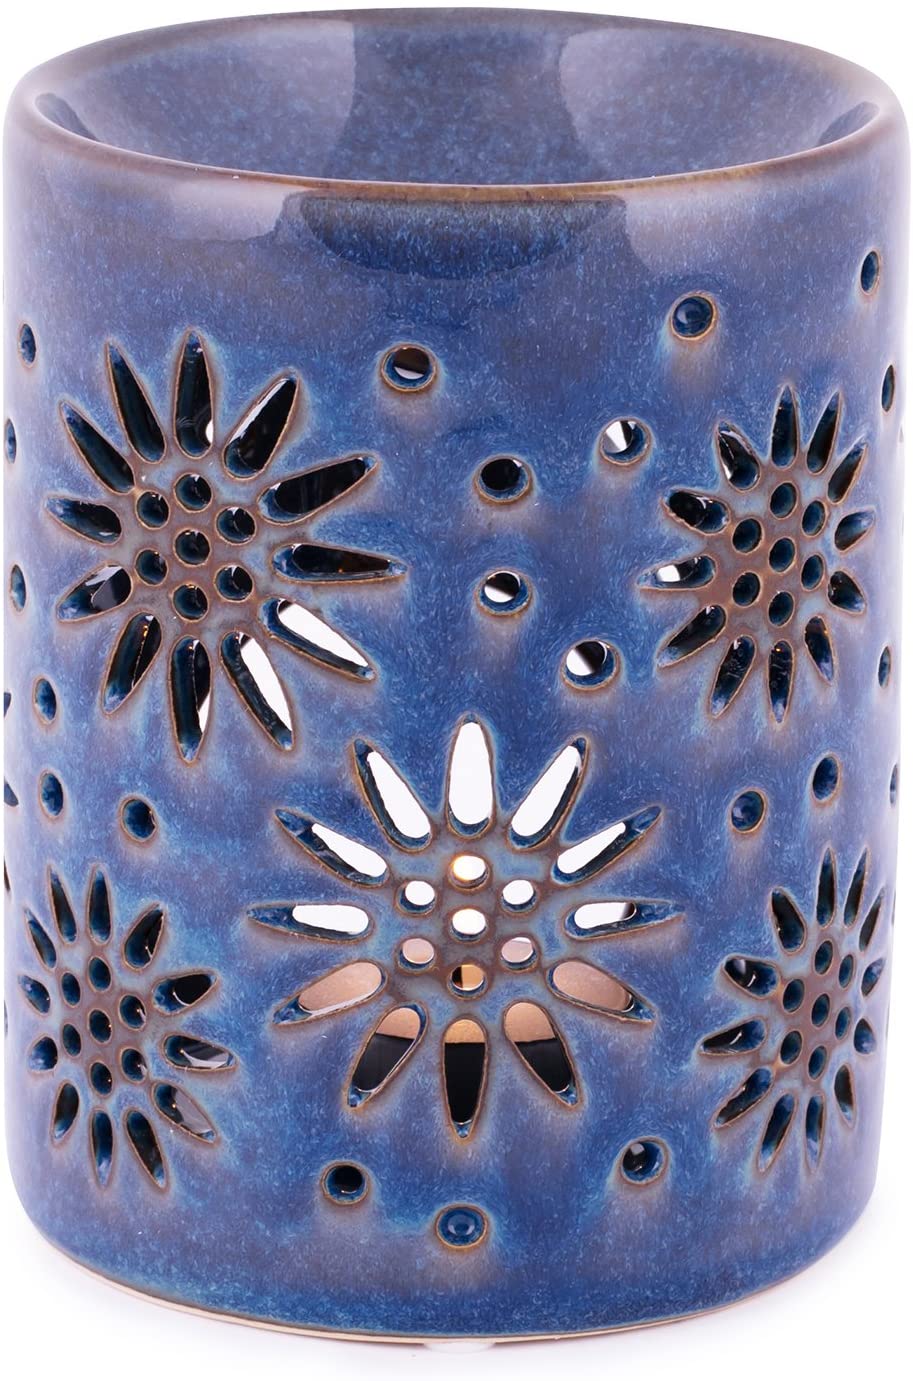 Pajoma Oil Burner Elesia Antique Blue, Ceramic, L 9.5 x W 9 x H 12.5 cm